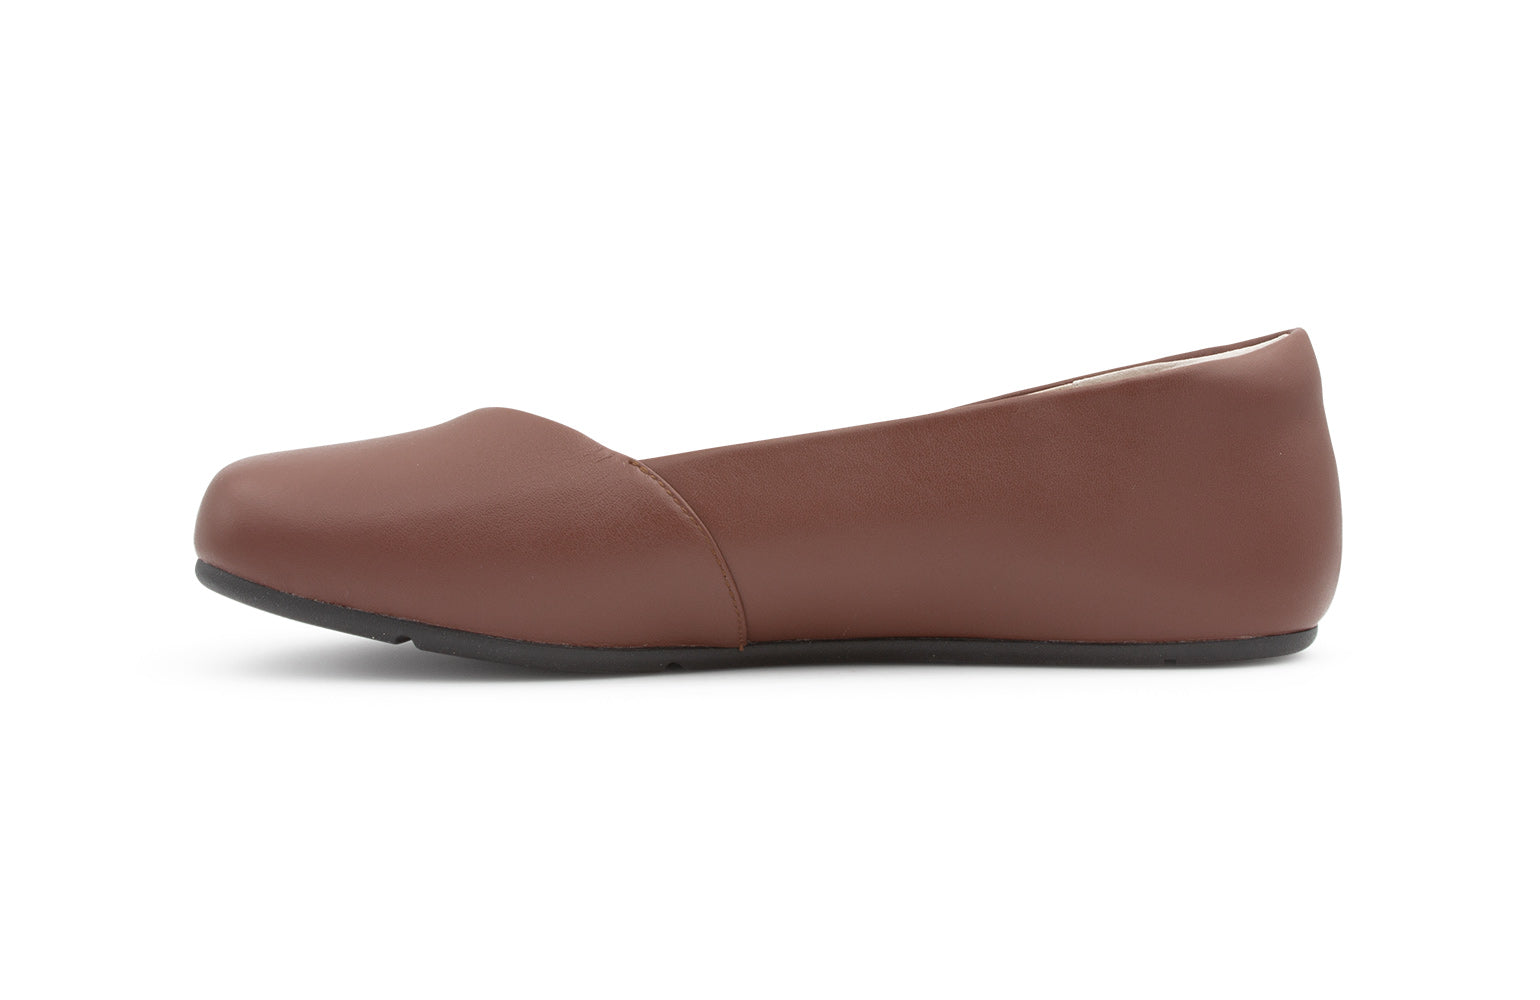 Xero Shoes Phoenix Leather barfods ballerinaer til kvinder i farven brown, inderside